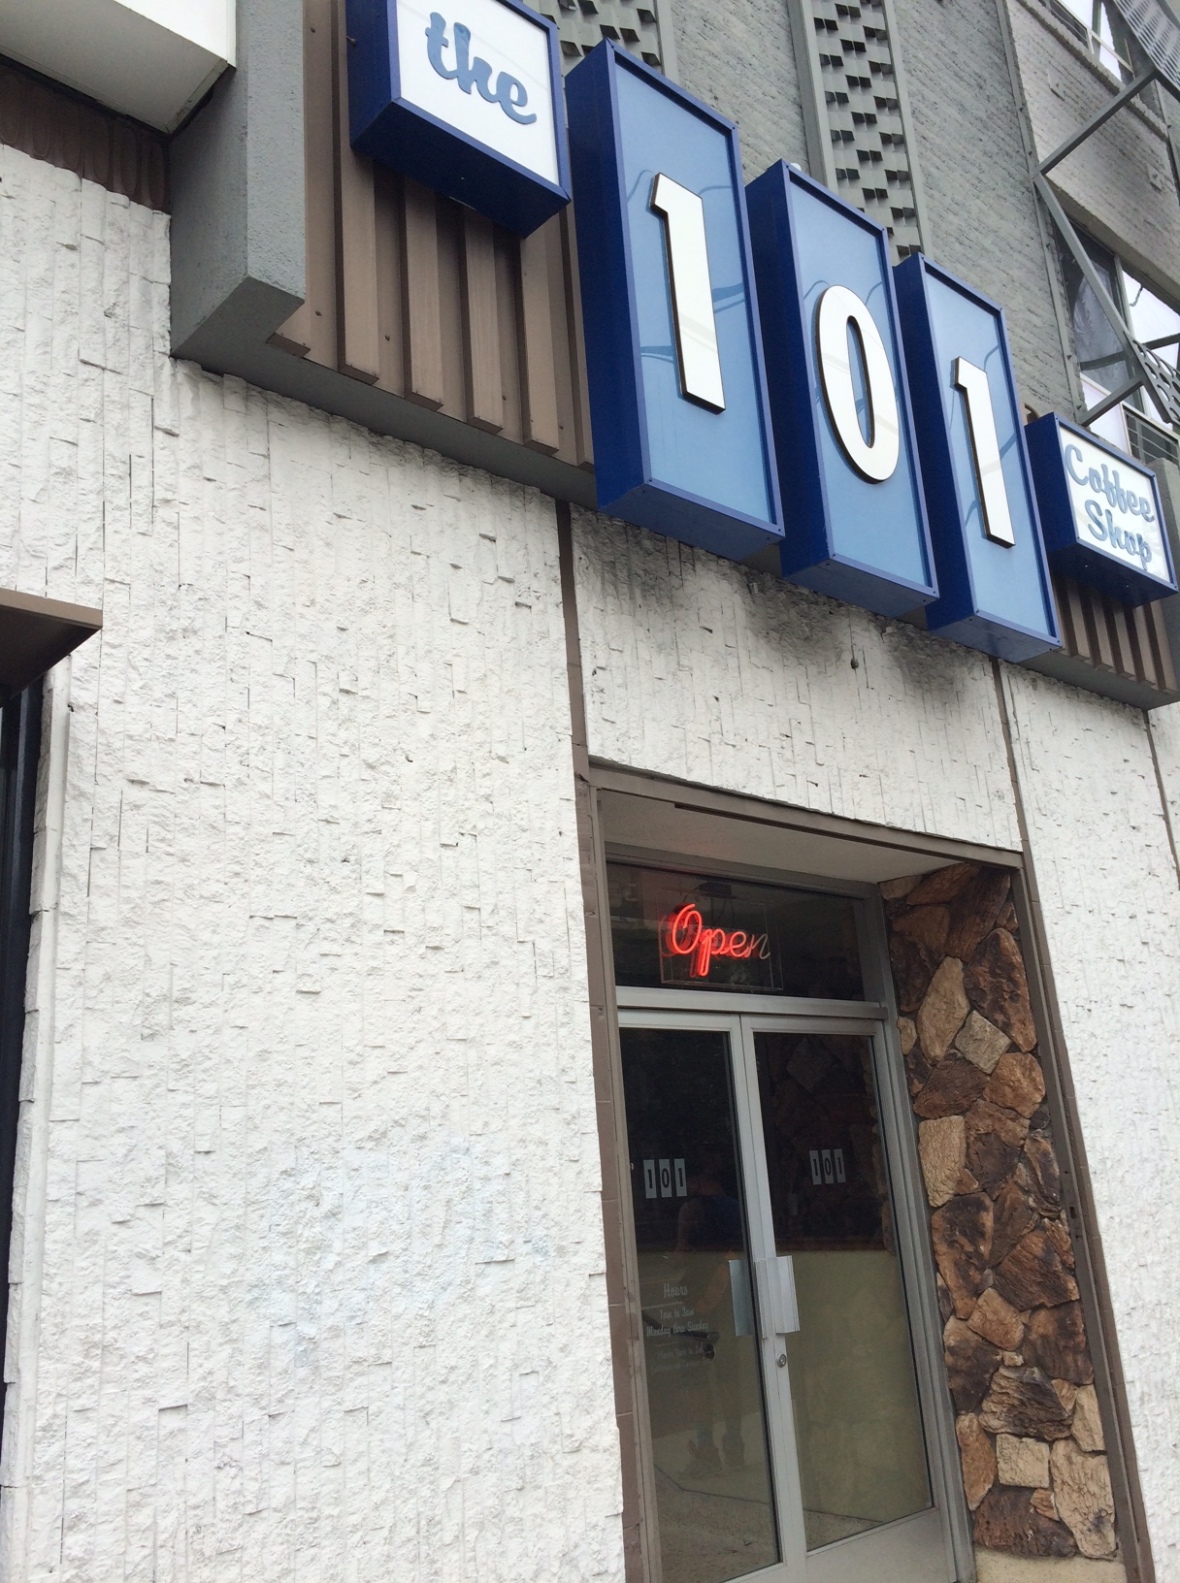 The 101 Coffee Shop